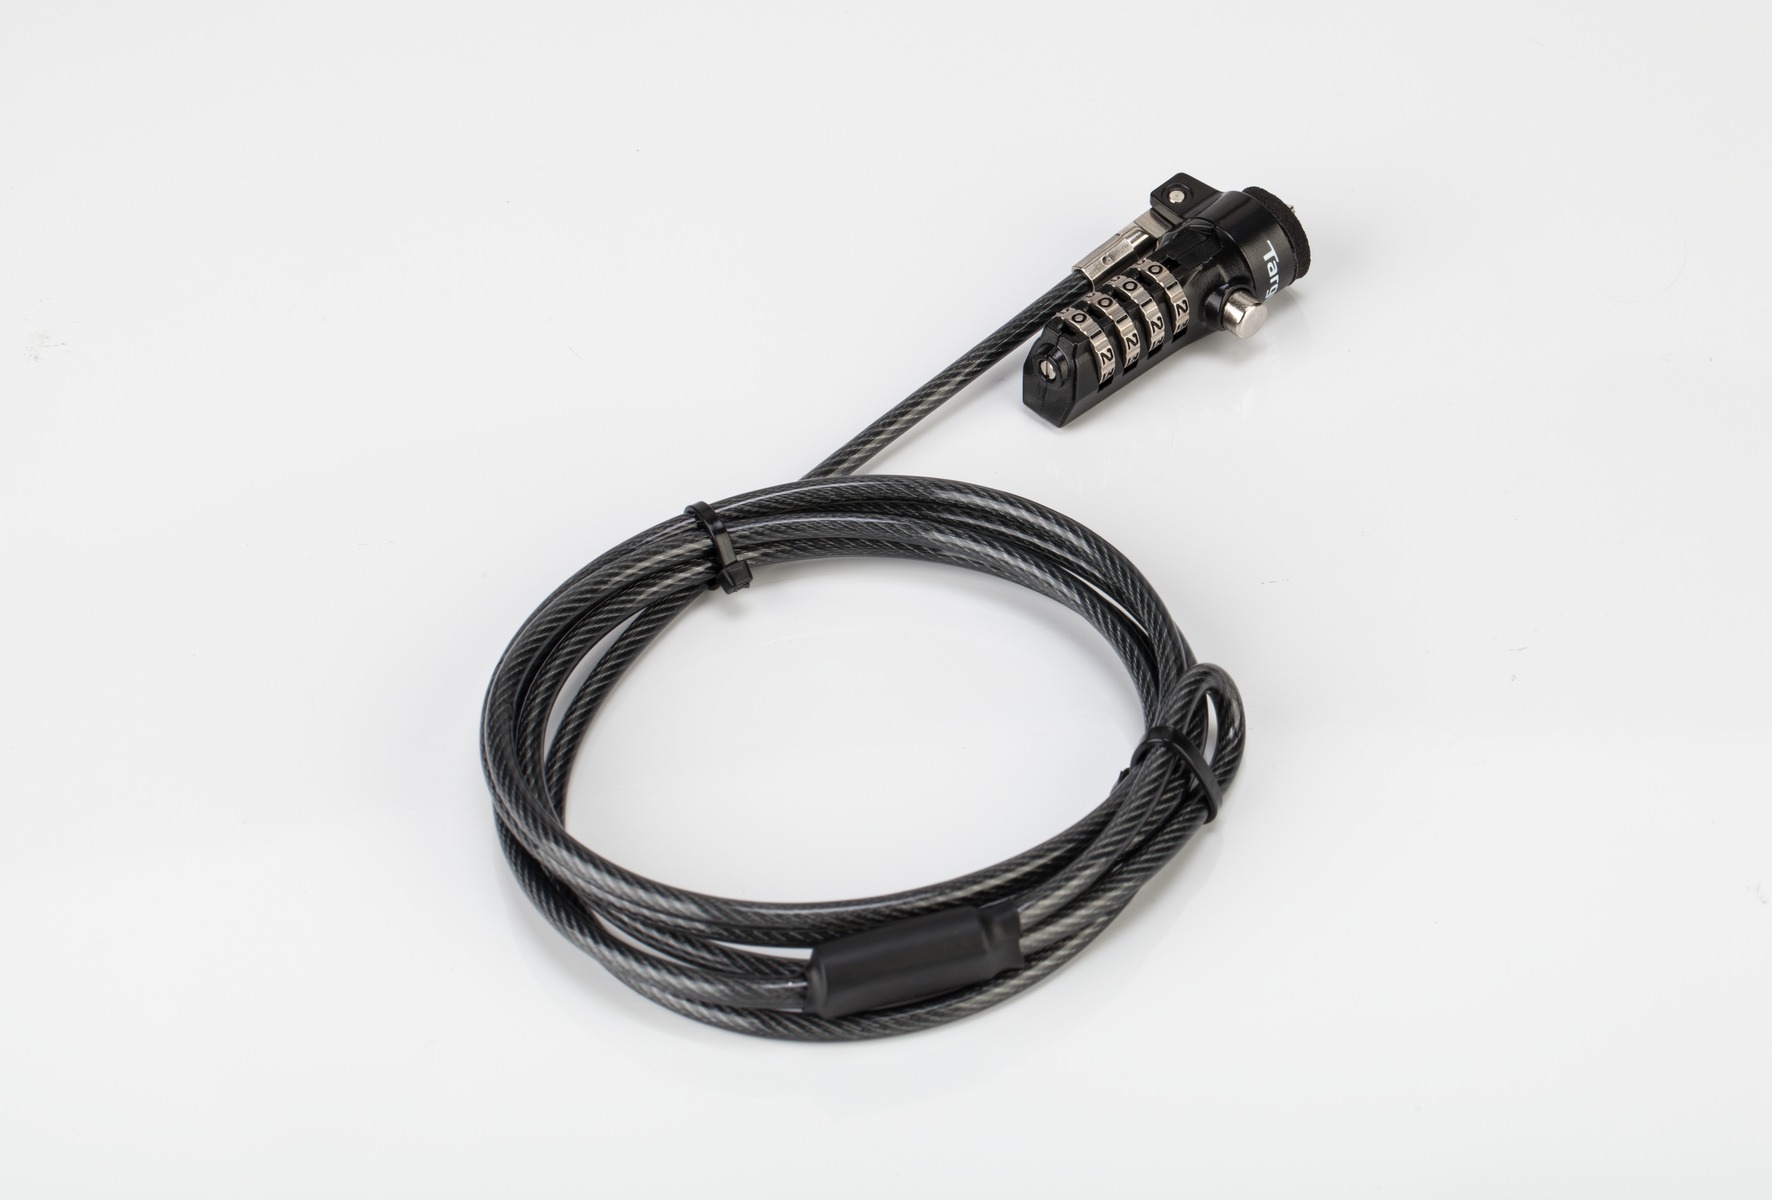  - Cable de seguridad T-lock resetteable Targus 4